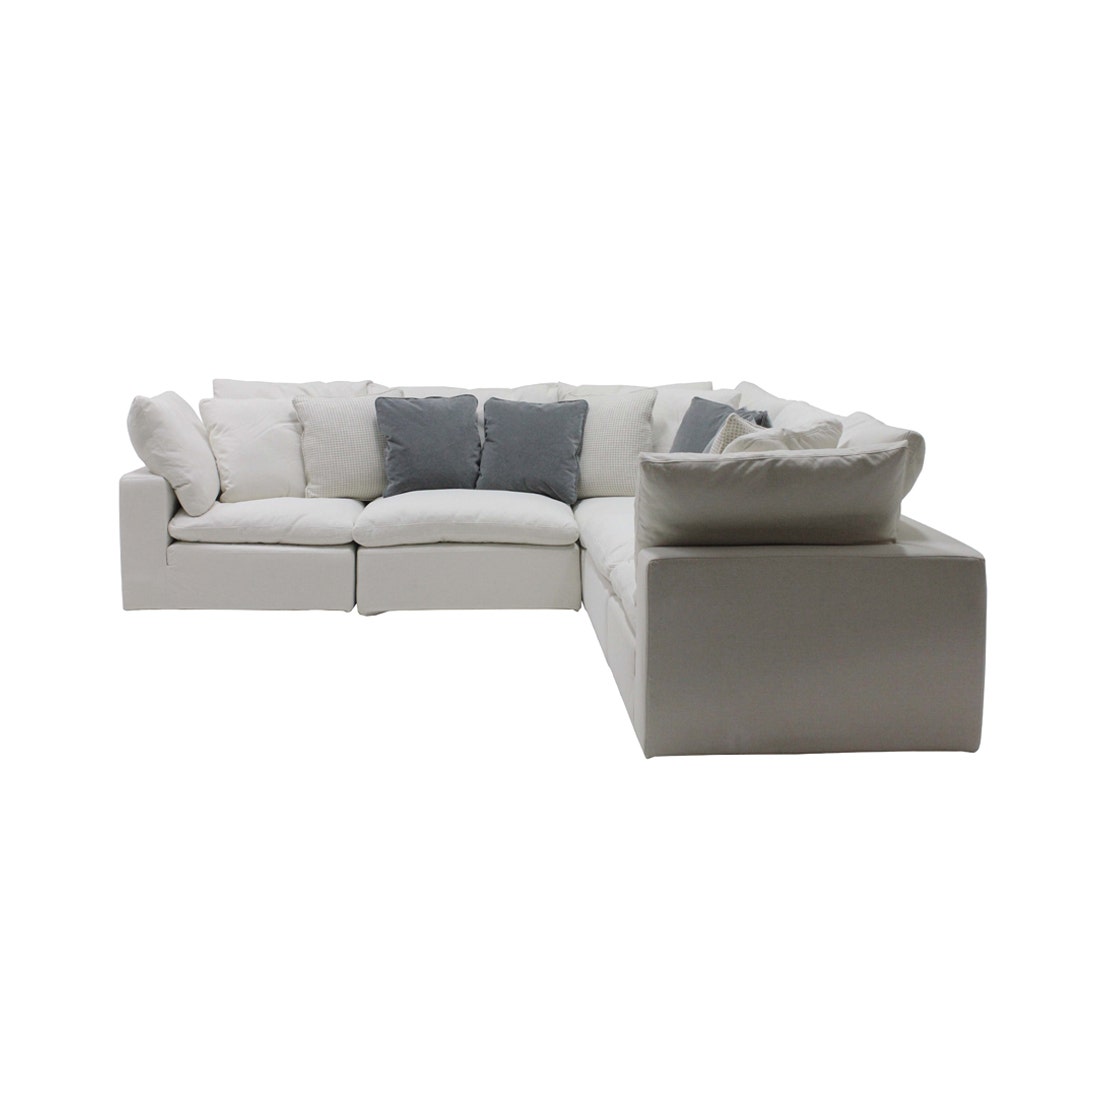 19134969-681551-610-furniture-sofa-recliner-corner-sofas-01